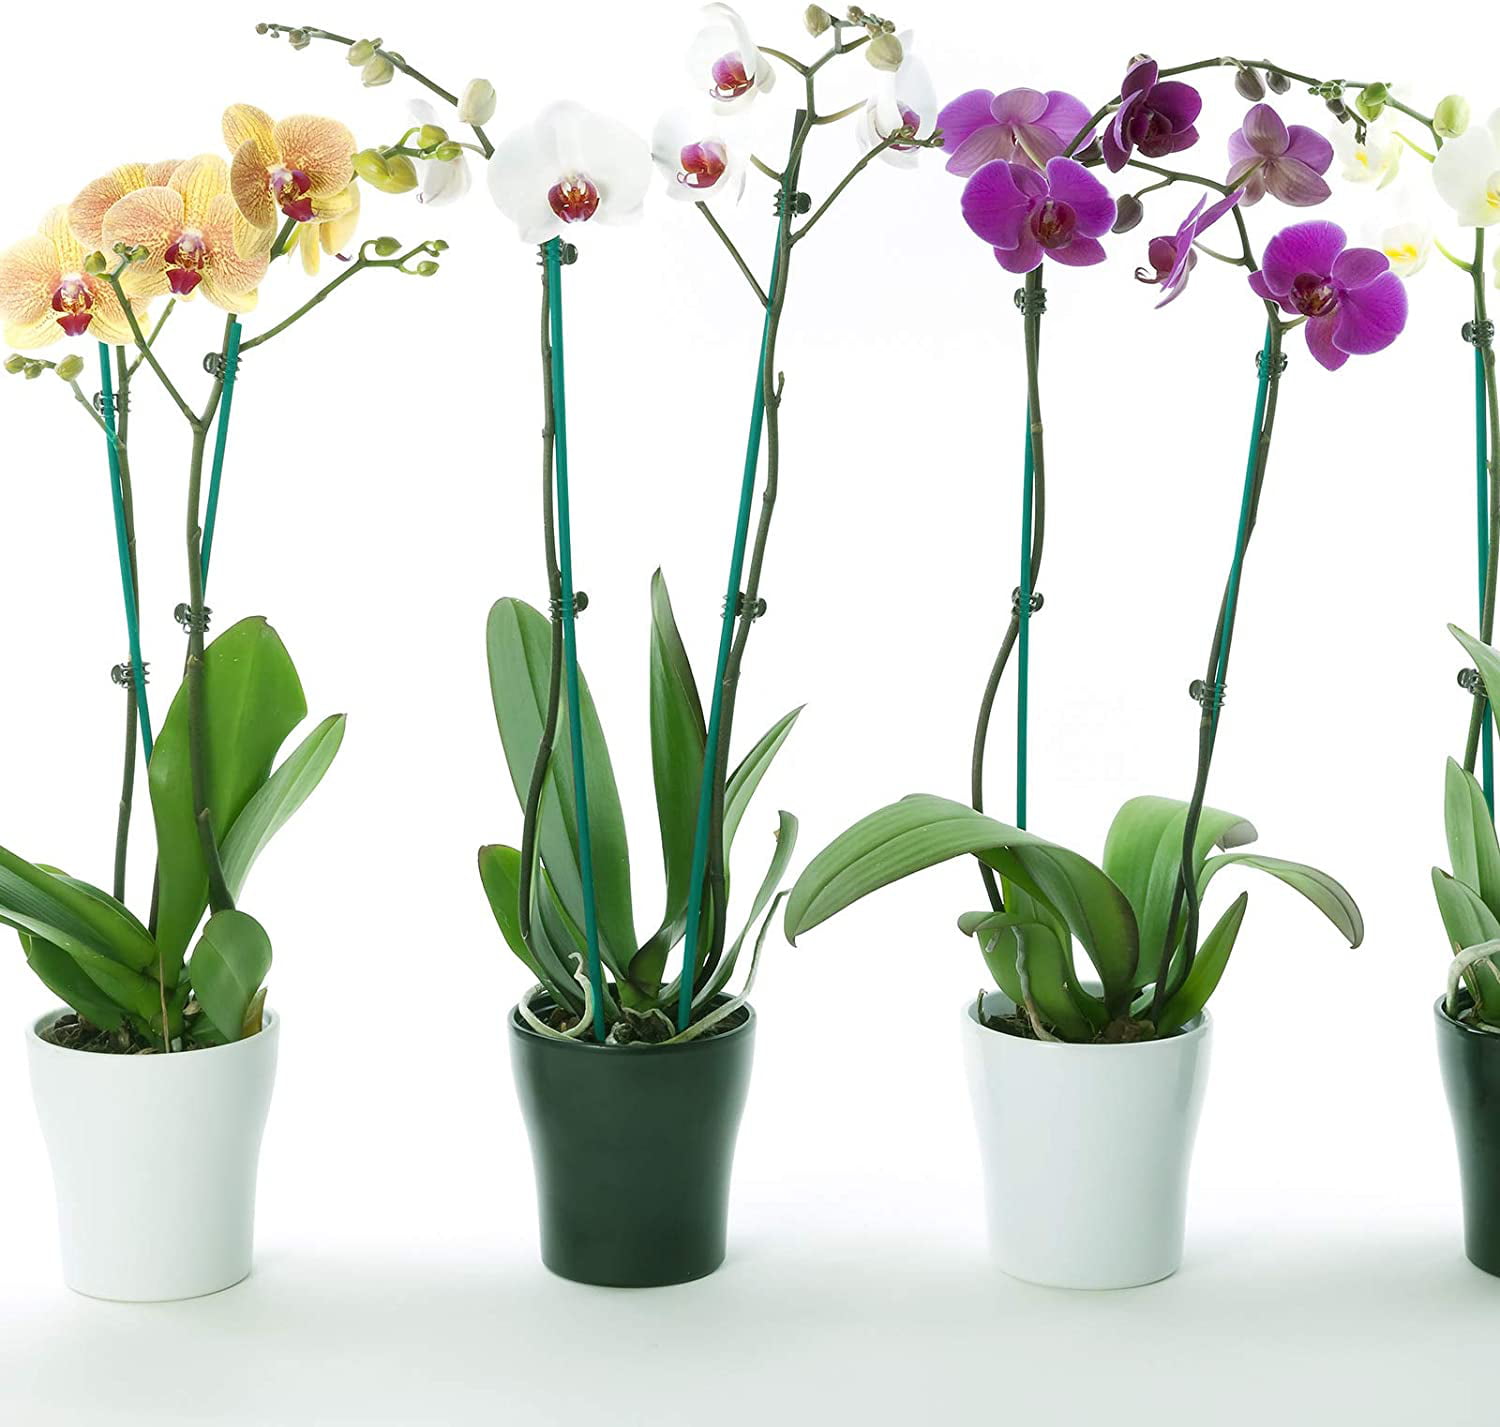 30 Pcs Plant Plastic Clips Garden Flower Vines Orchid Stems Stalks Grow Upright 